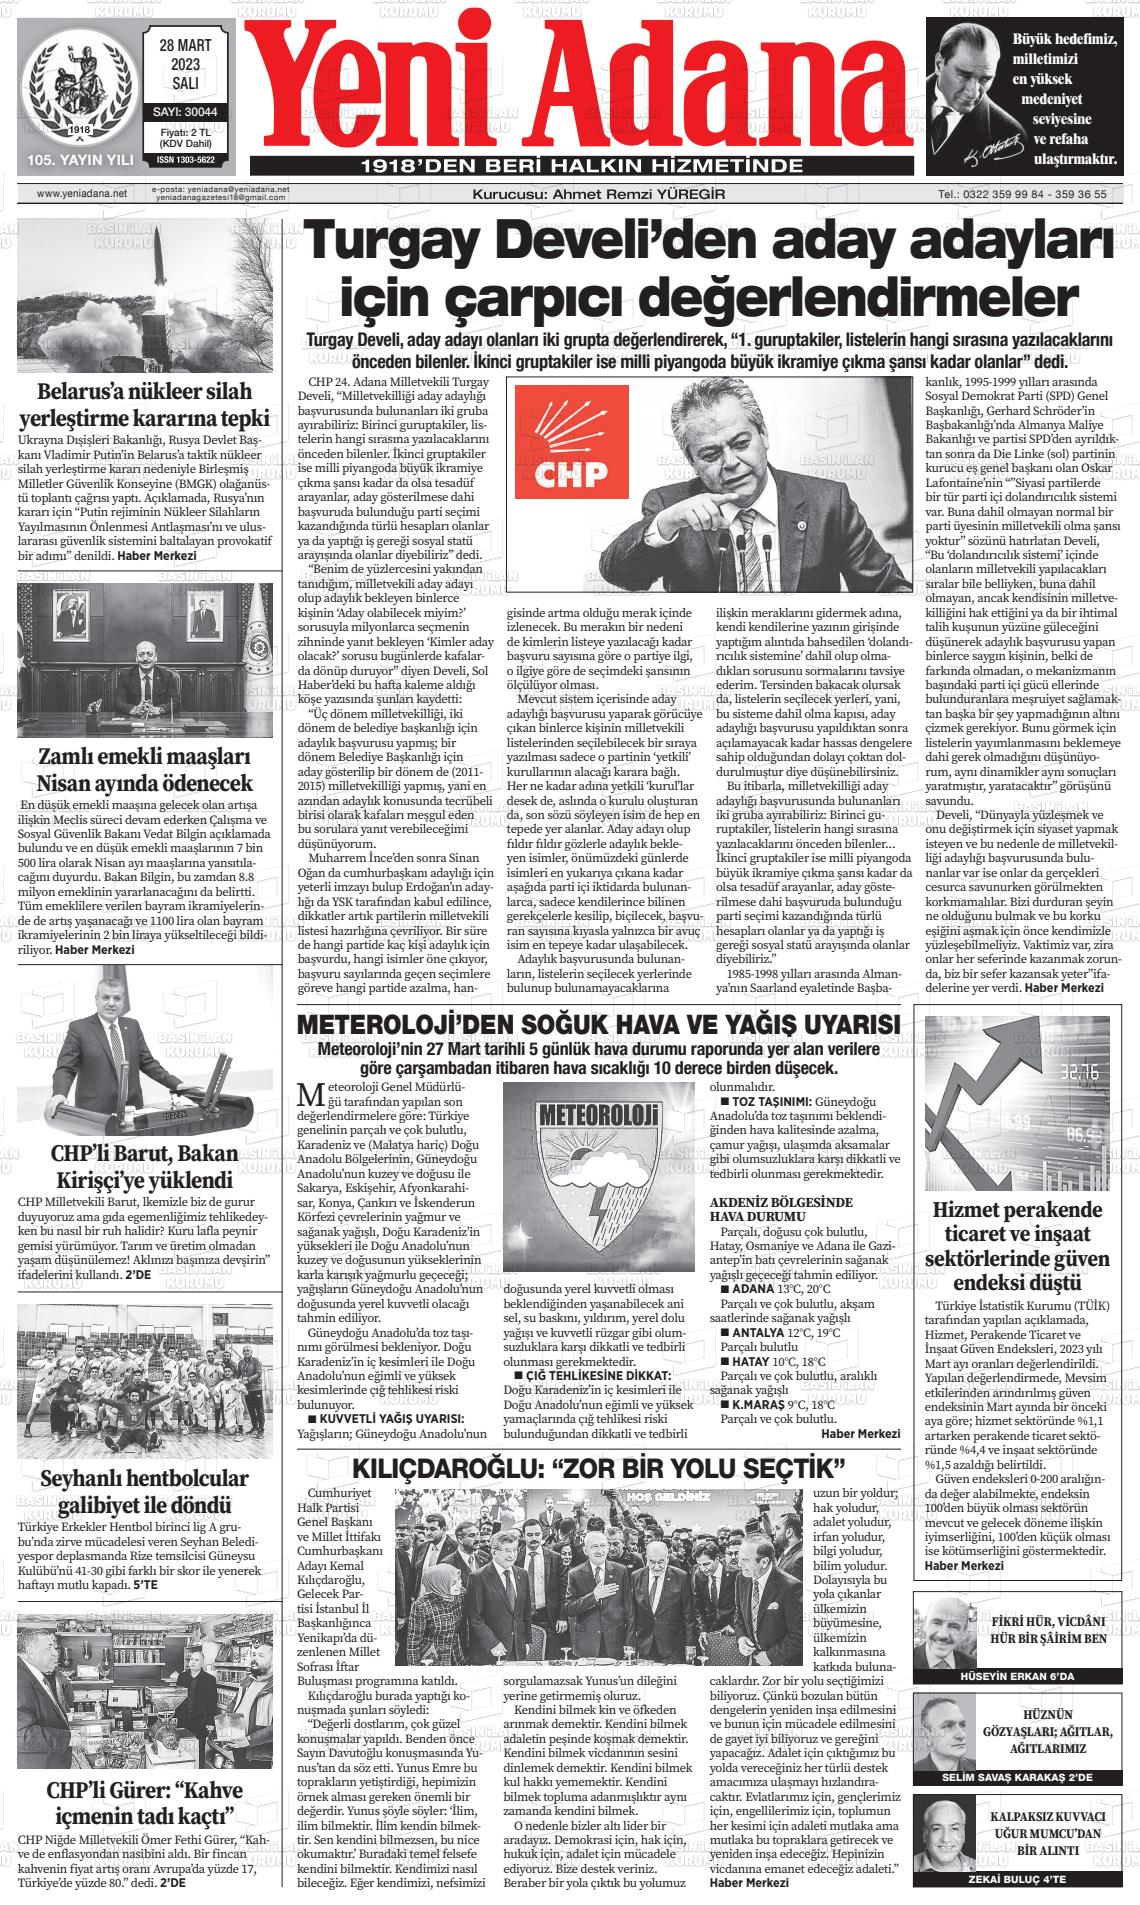 28 Mart 2023 Yeni Adana Gazete Manşeti